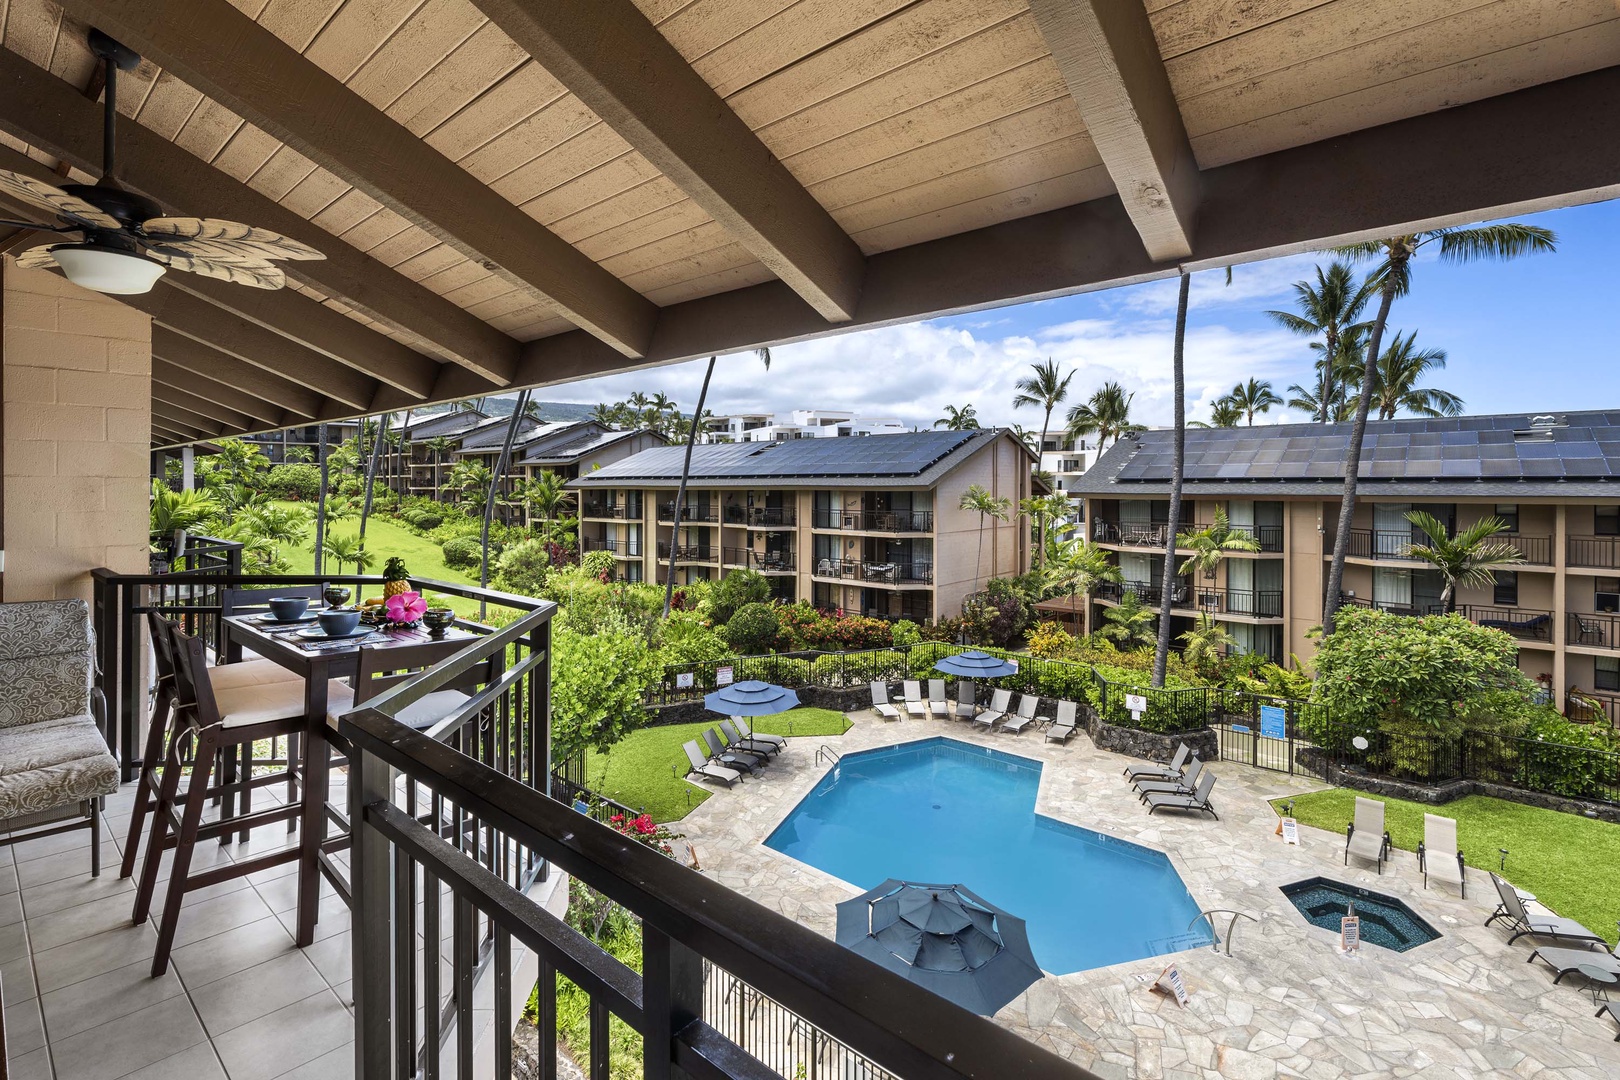 Kailua Kona Vacation Rentals, Kona Makai 6303 - Lanai with overlooking pool view